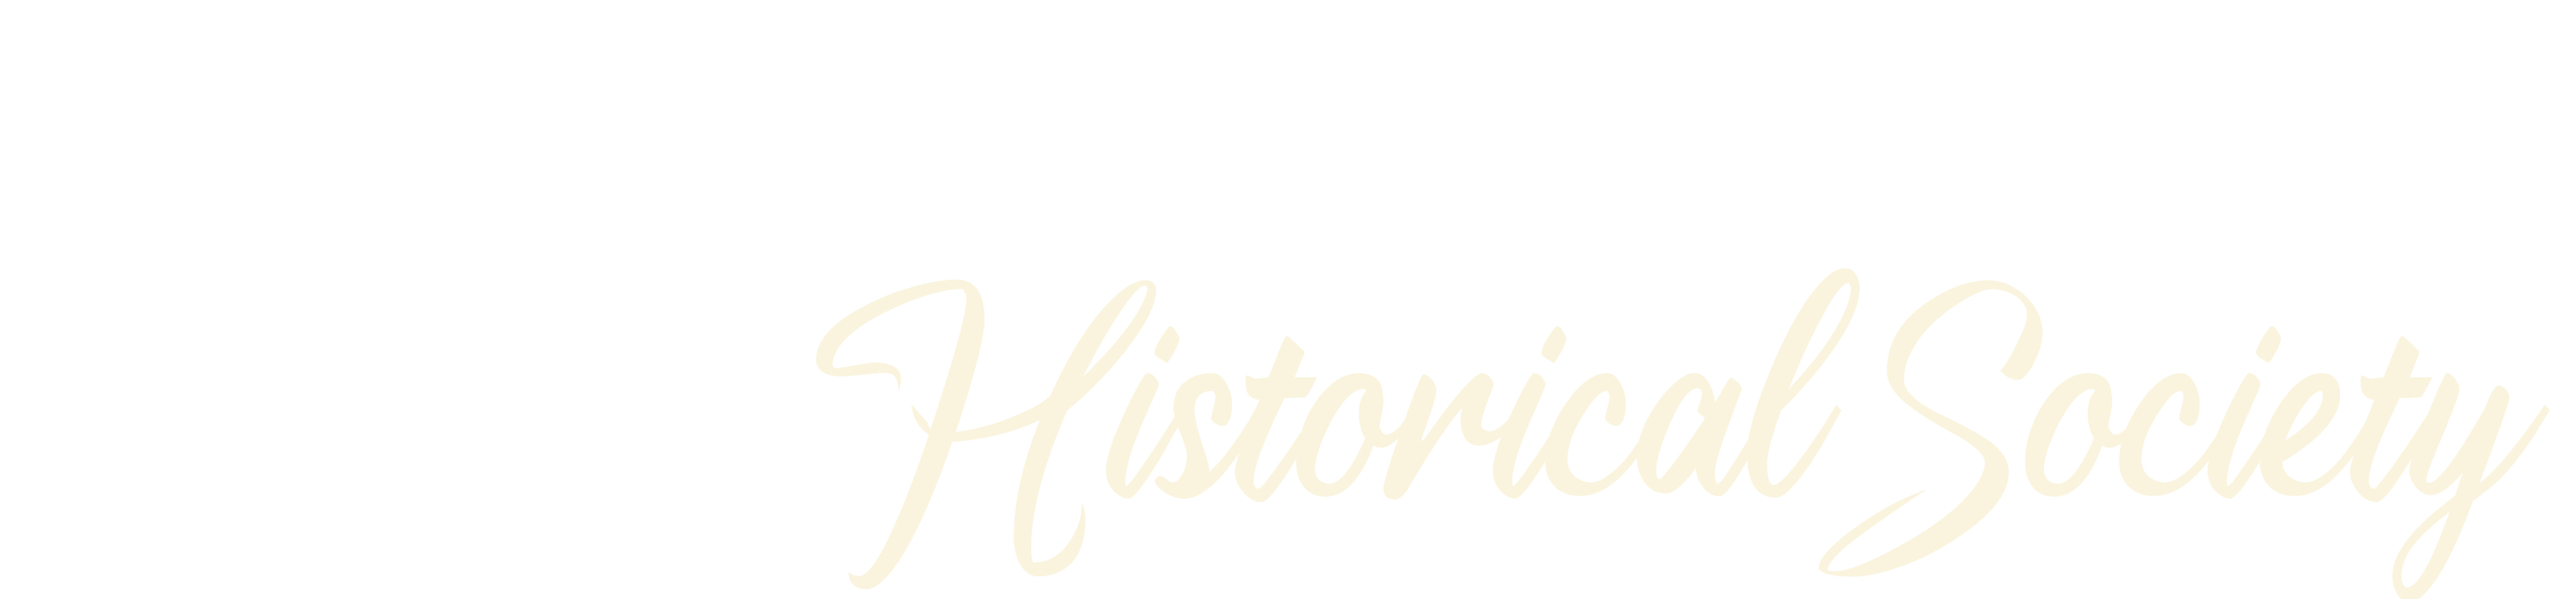 Tipton County Historical Society Logo